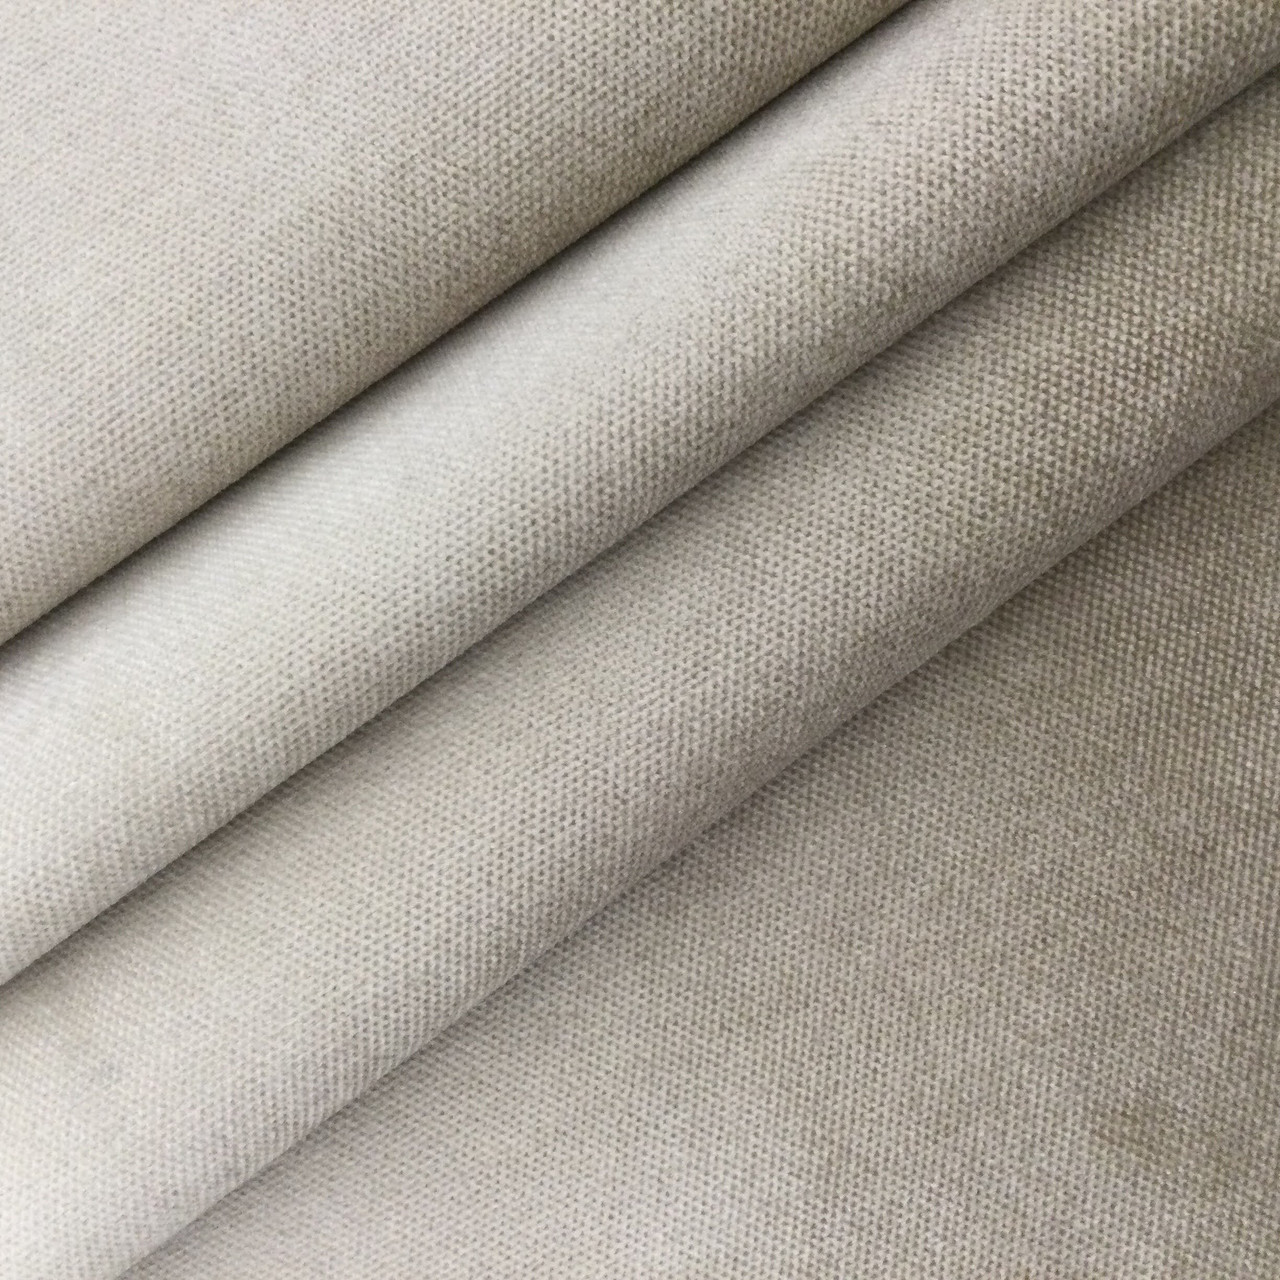 Solid Velvet Upholstery Fabric by yard (meter)